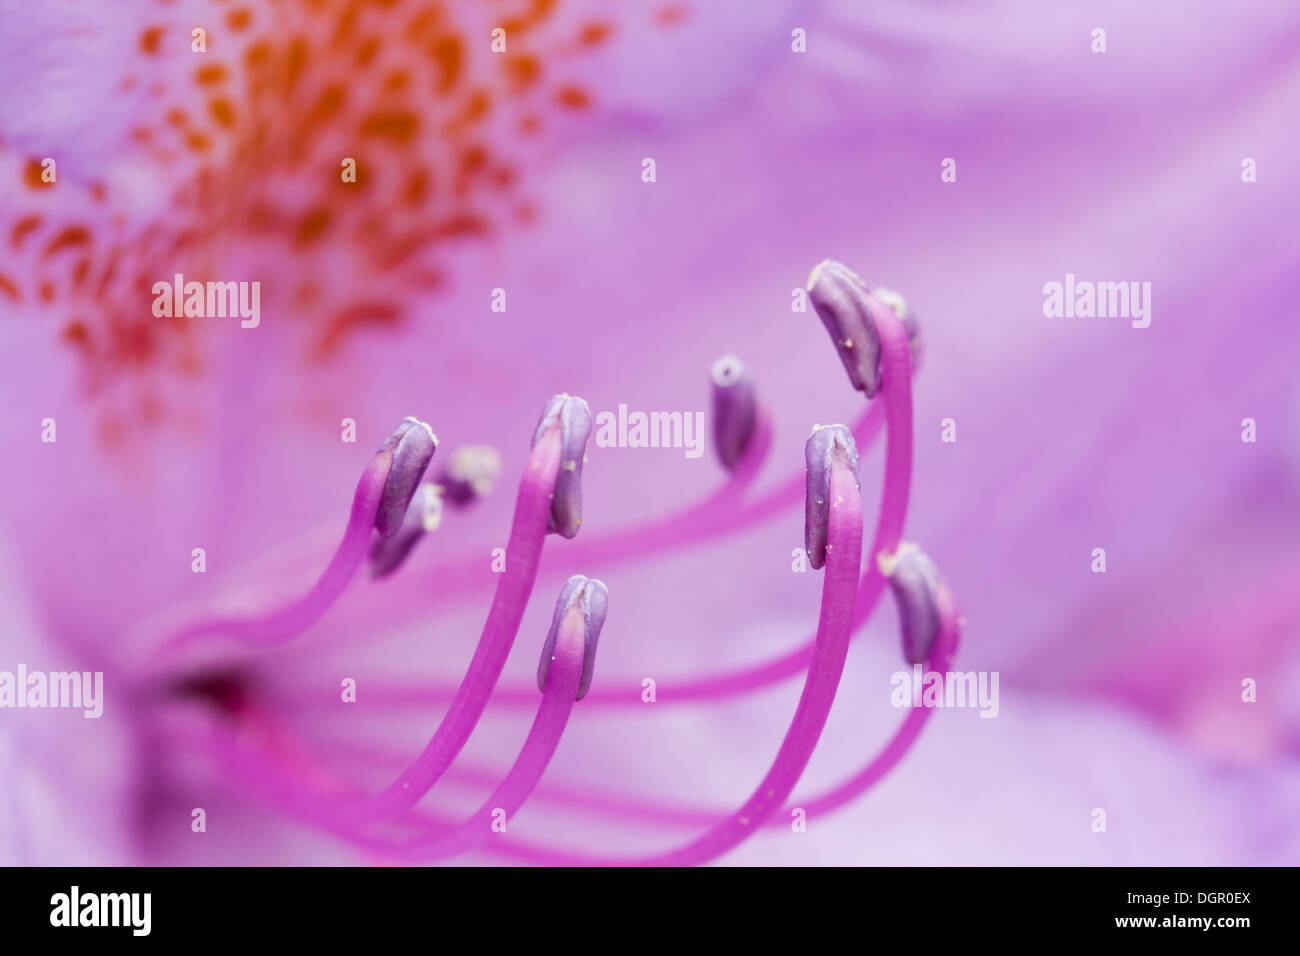 Closeup of a purple flower's pistils Stock Photo